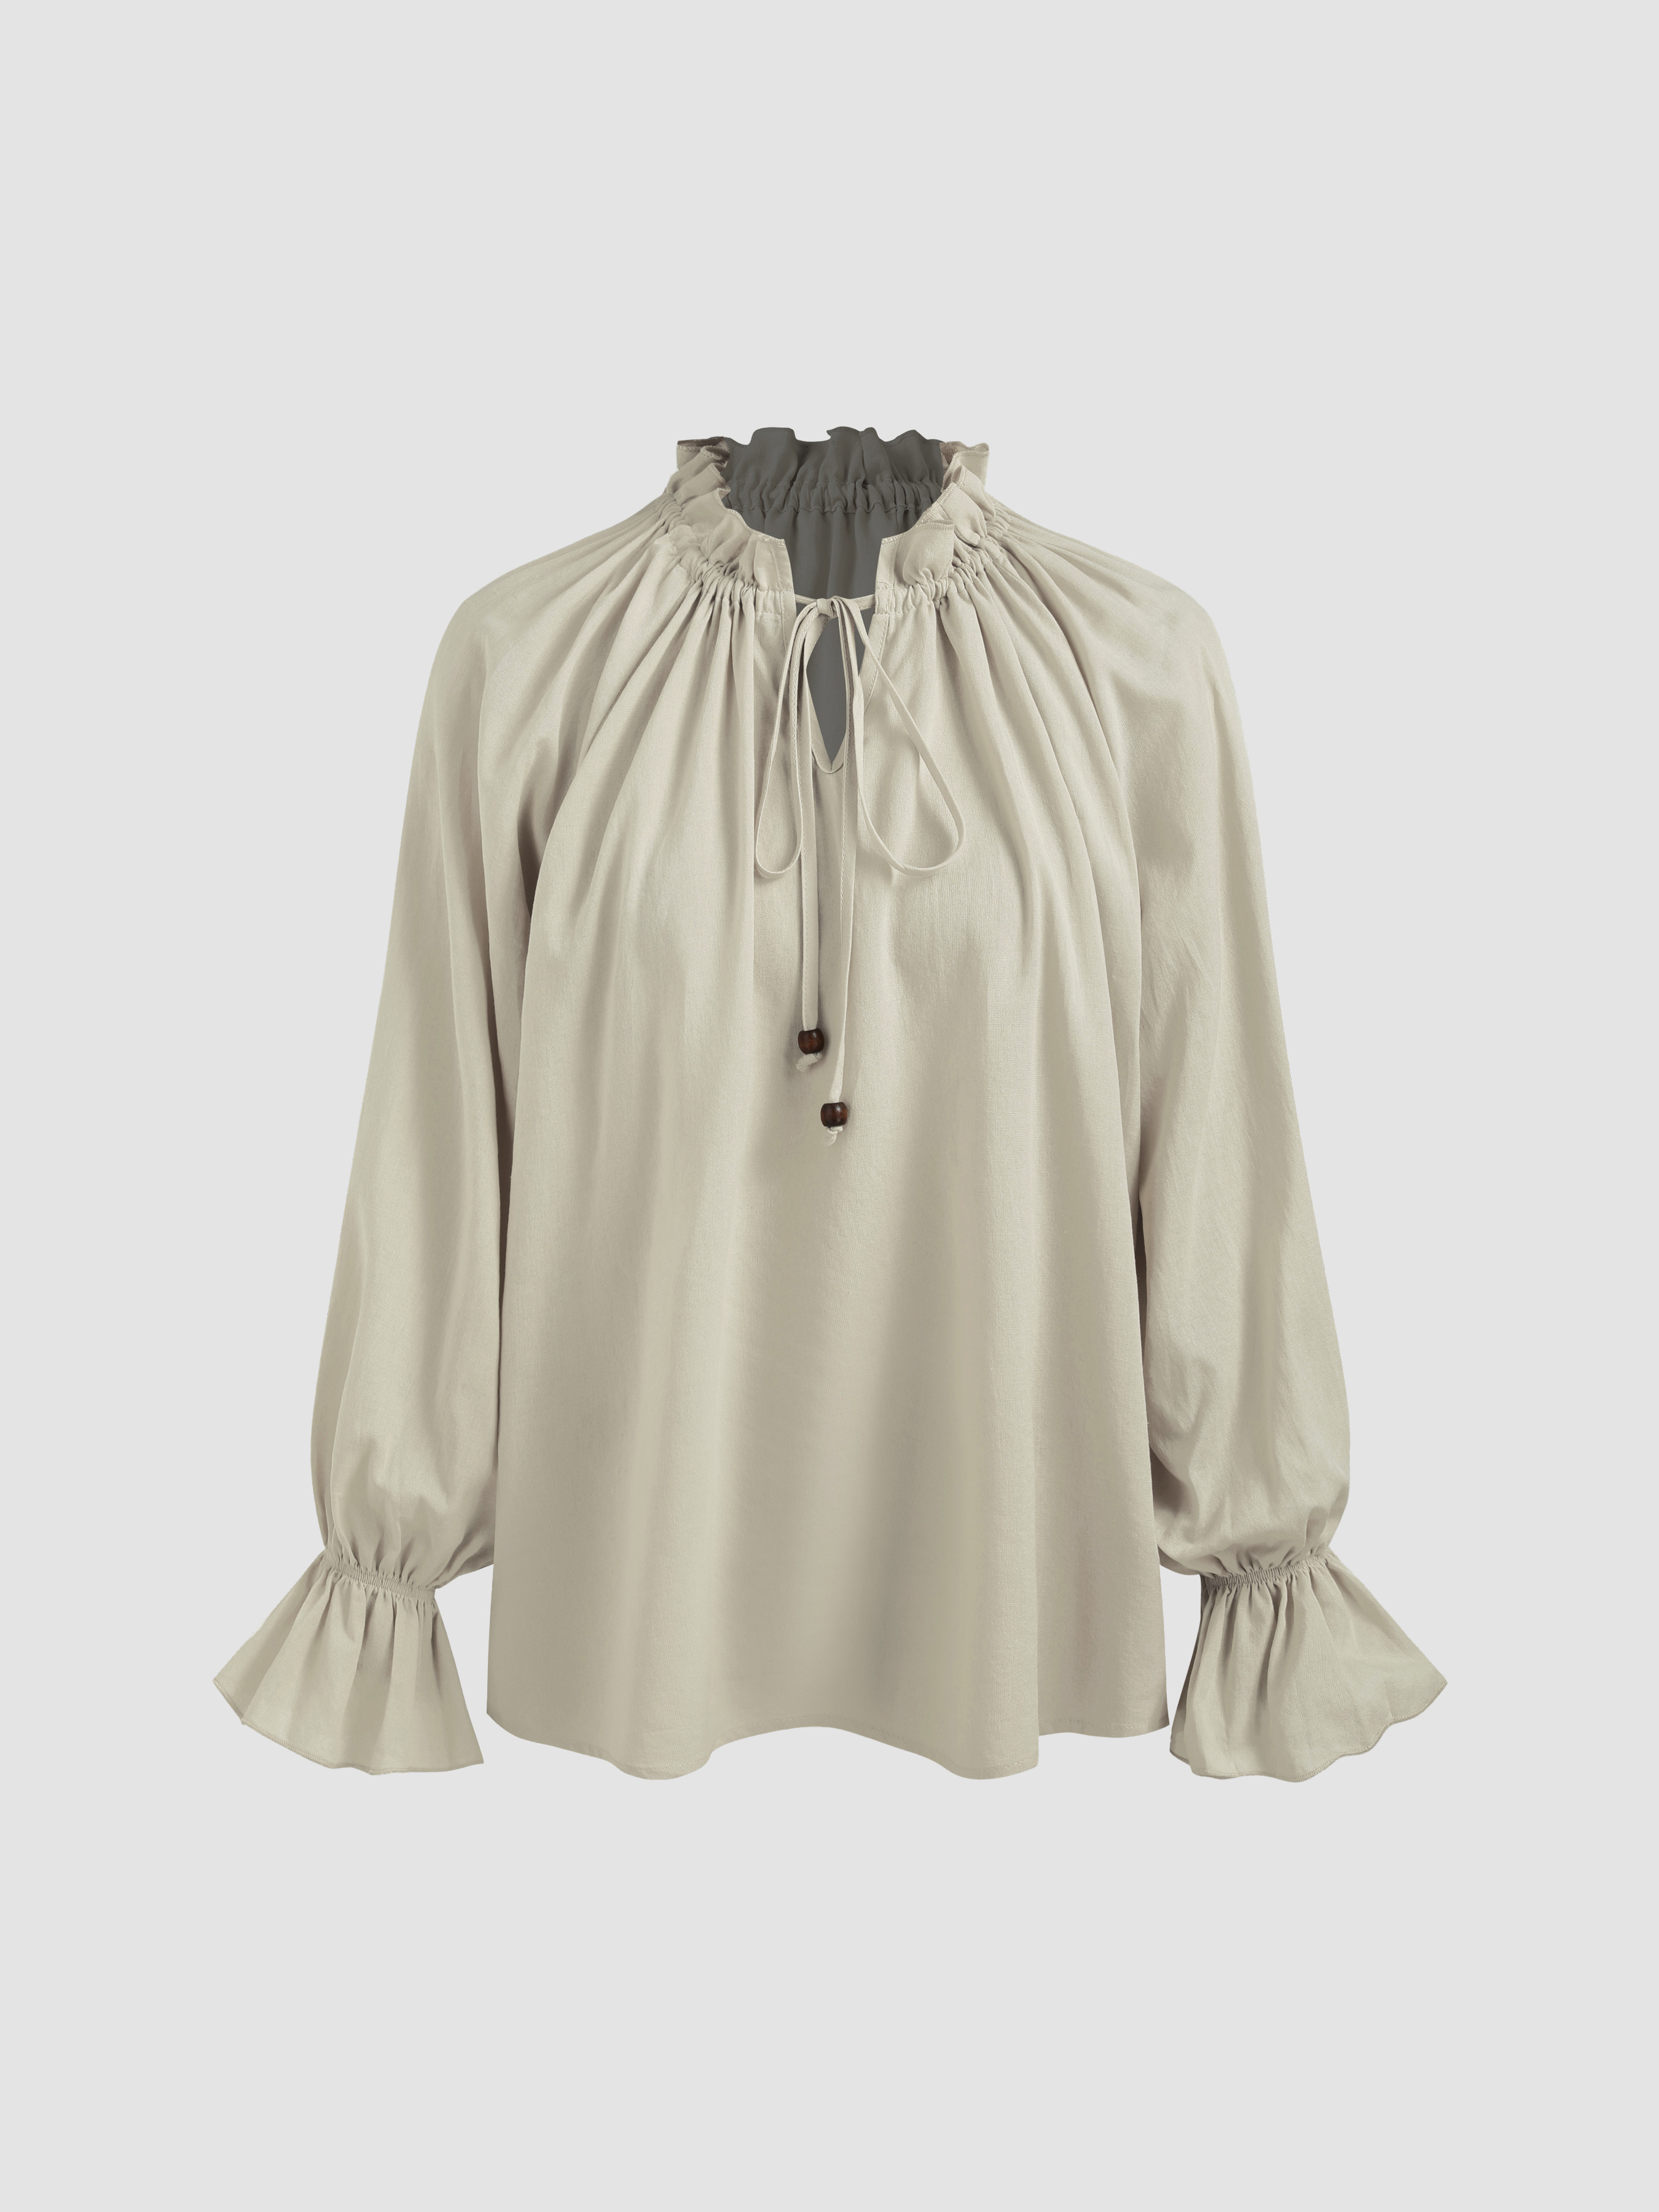 Check Cotton Collar Long Sleeve Blouses - Floryday @ floryday.com